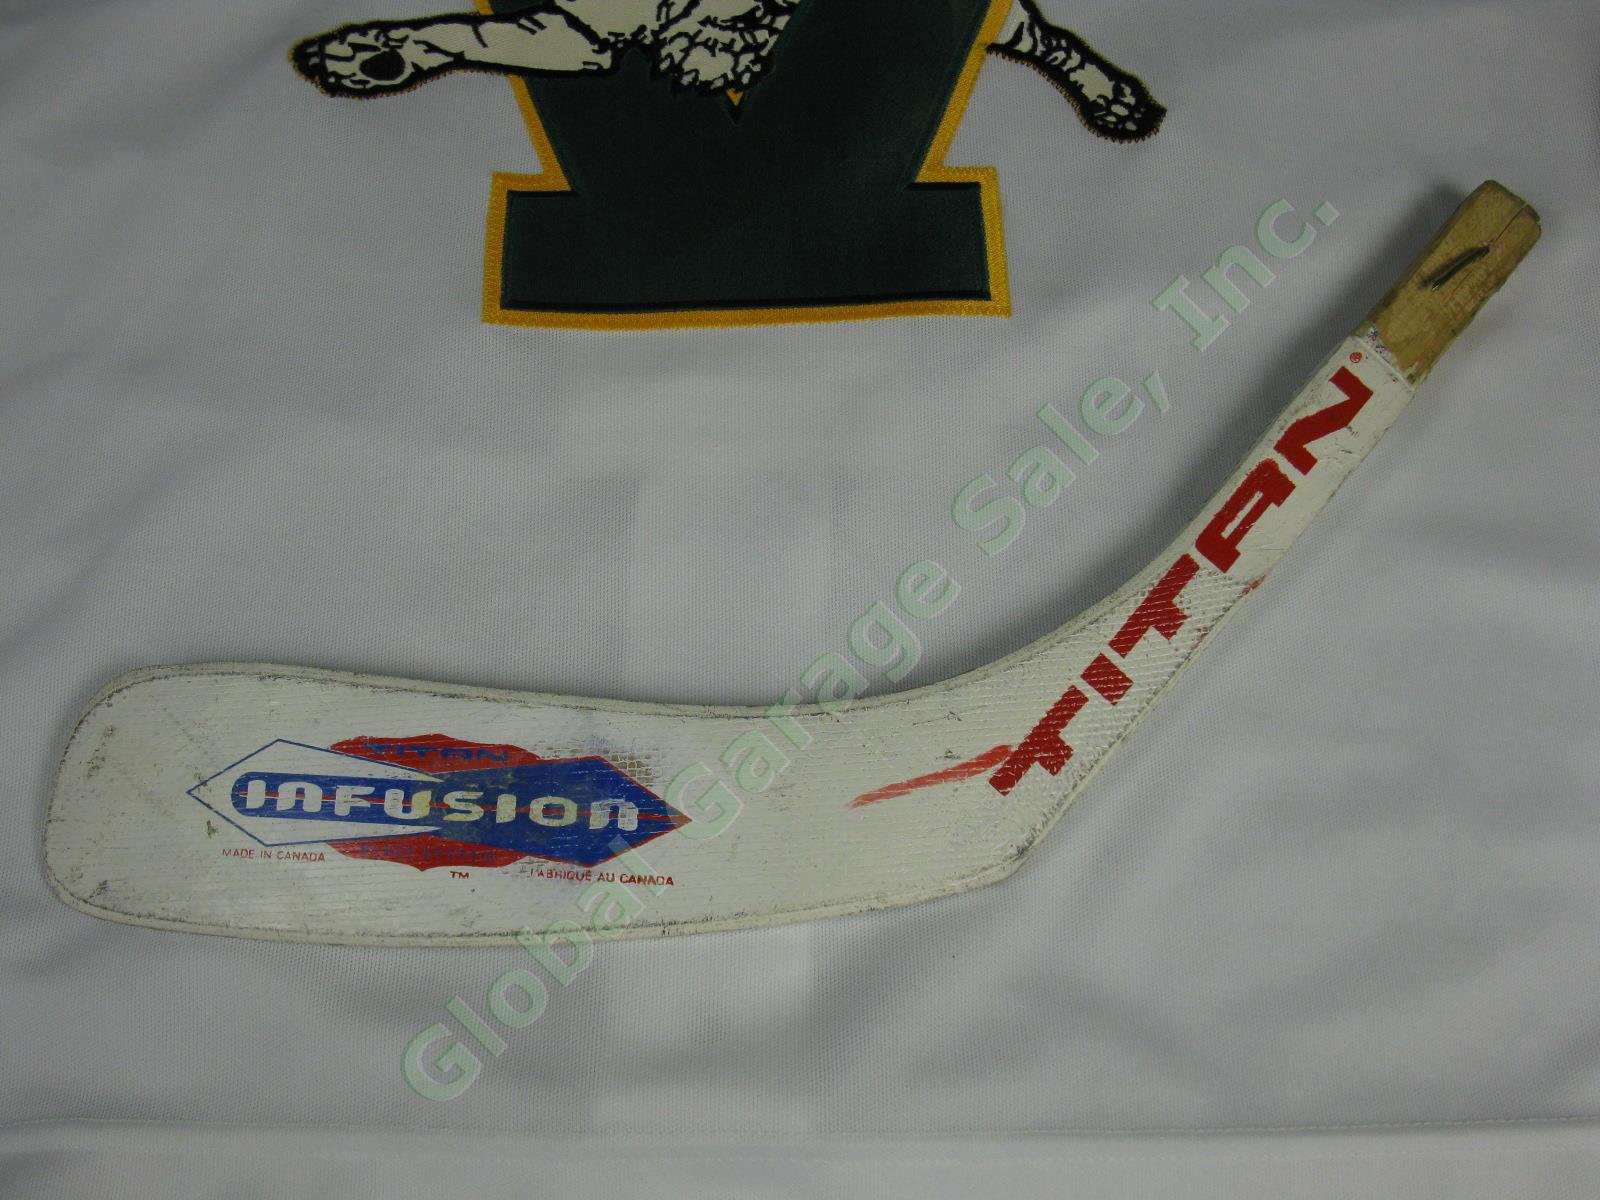 Martin St Louis Signed NHL Selanne Hockey Stick Blade + UVM Catamounts Jersey NR 4